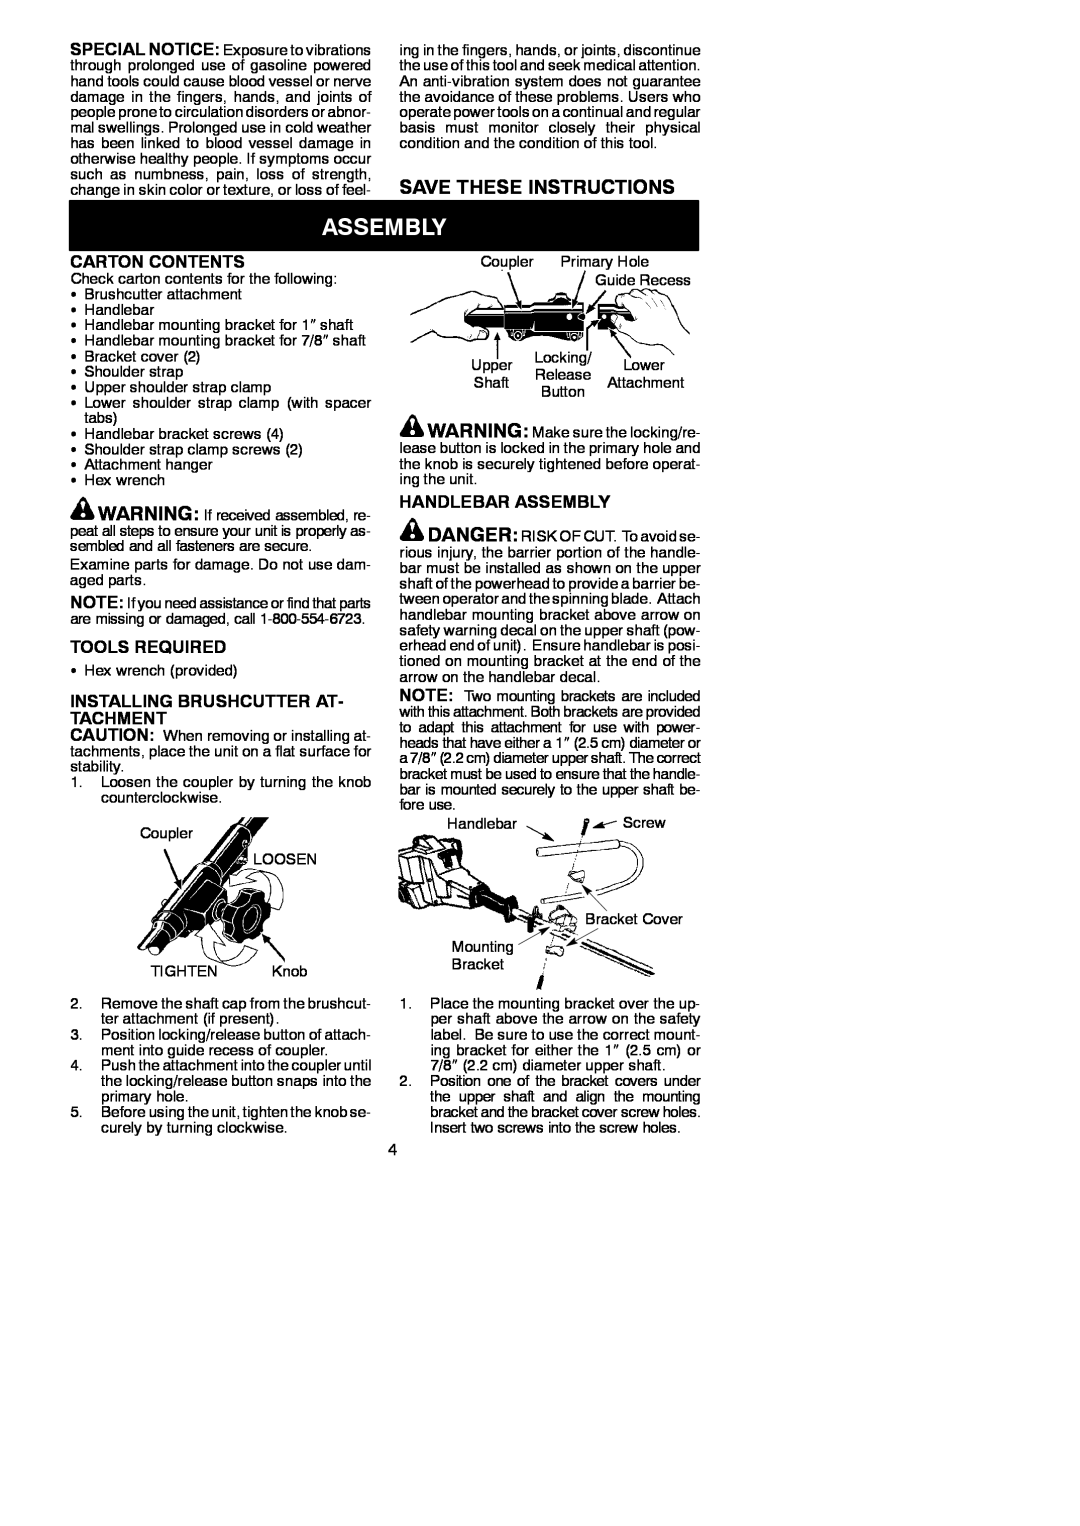 Poulan U4000C instruction manual Assembly, Save These Instructions 